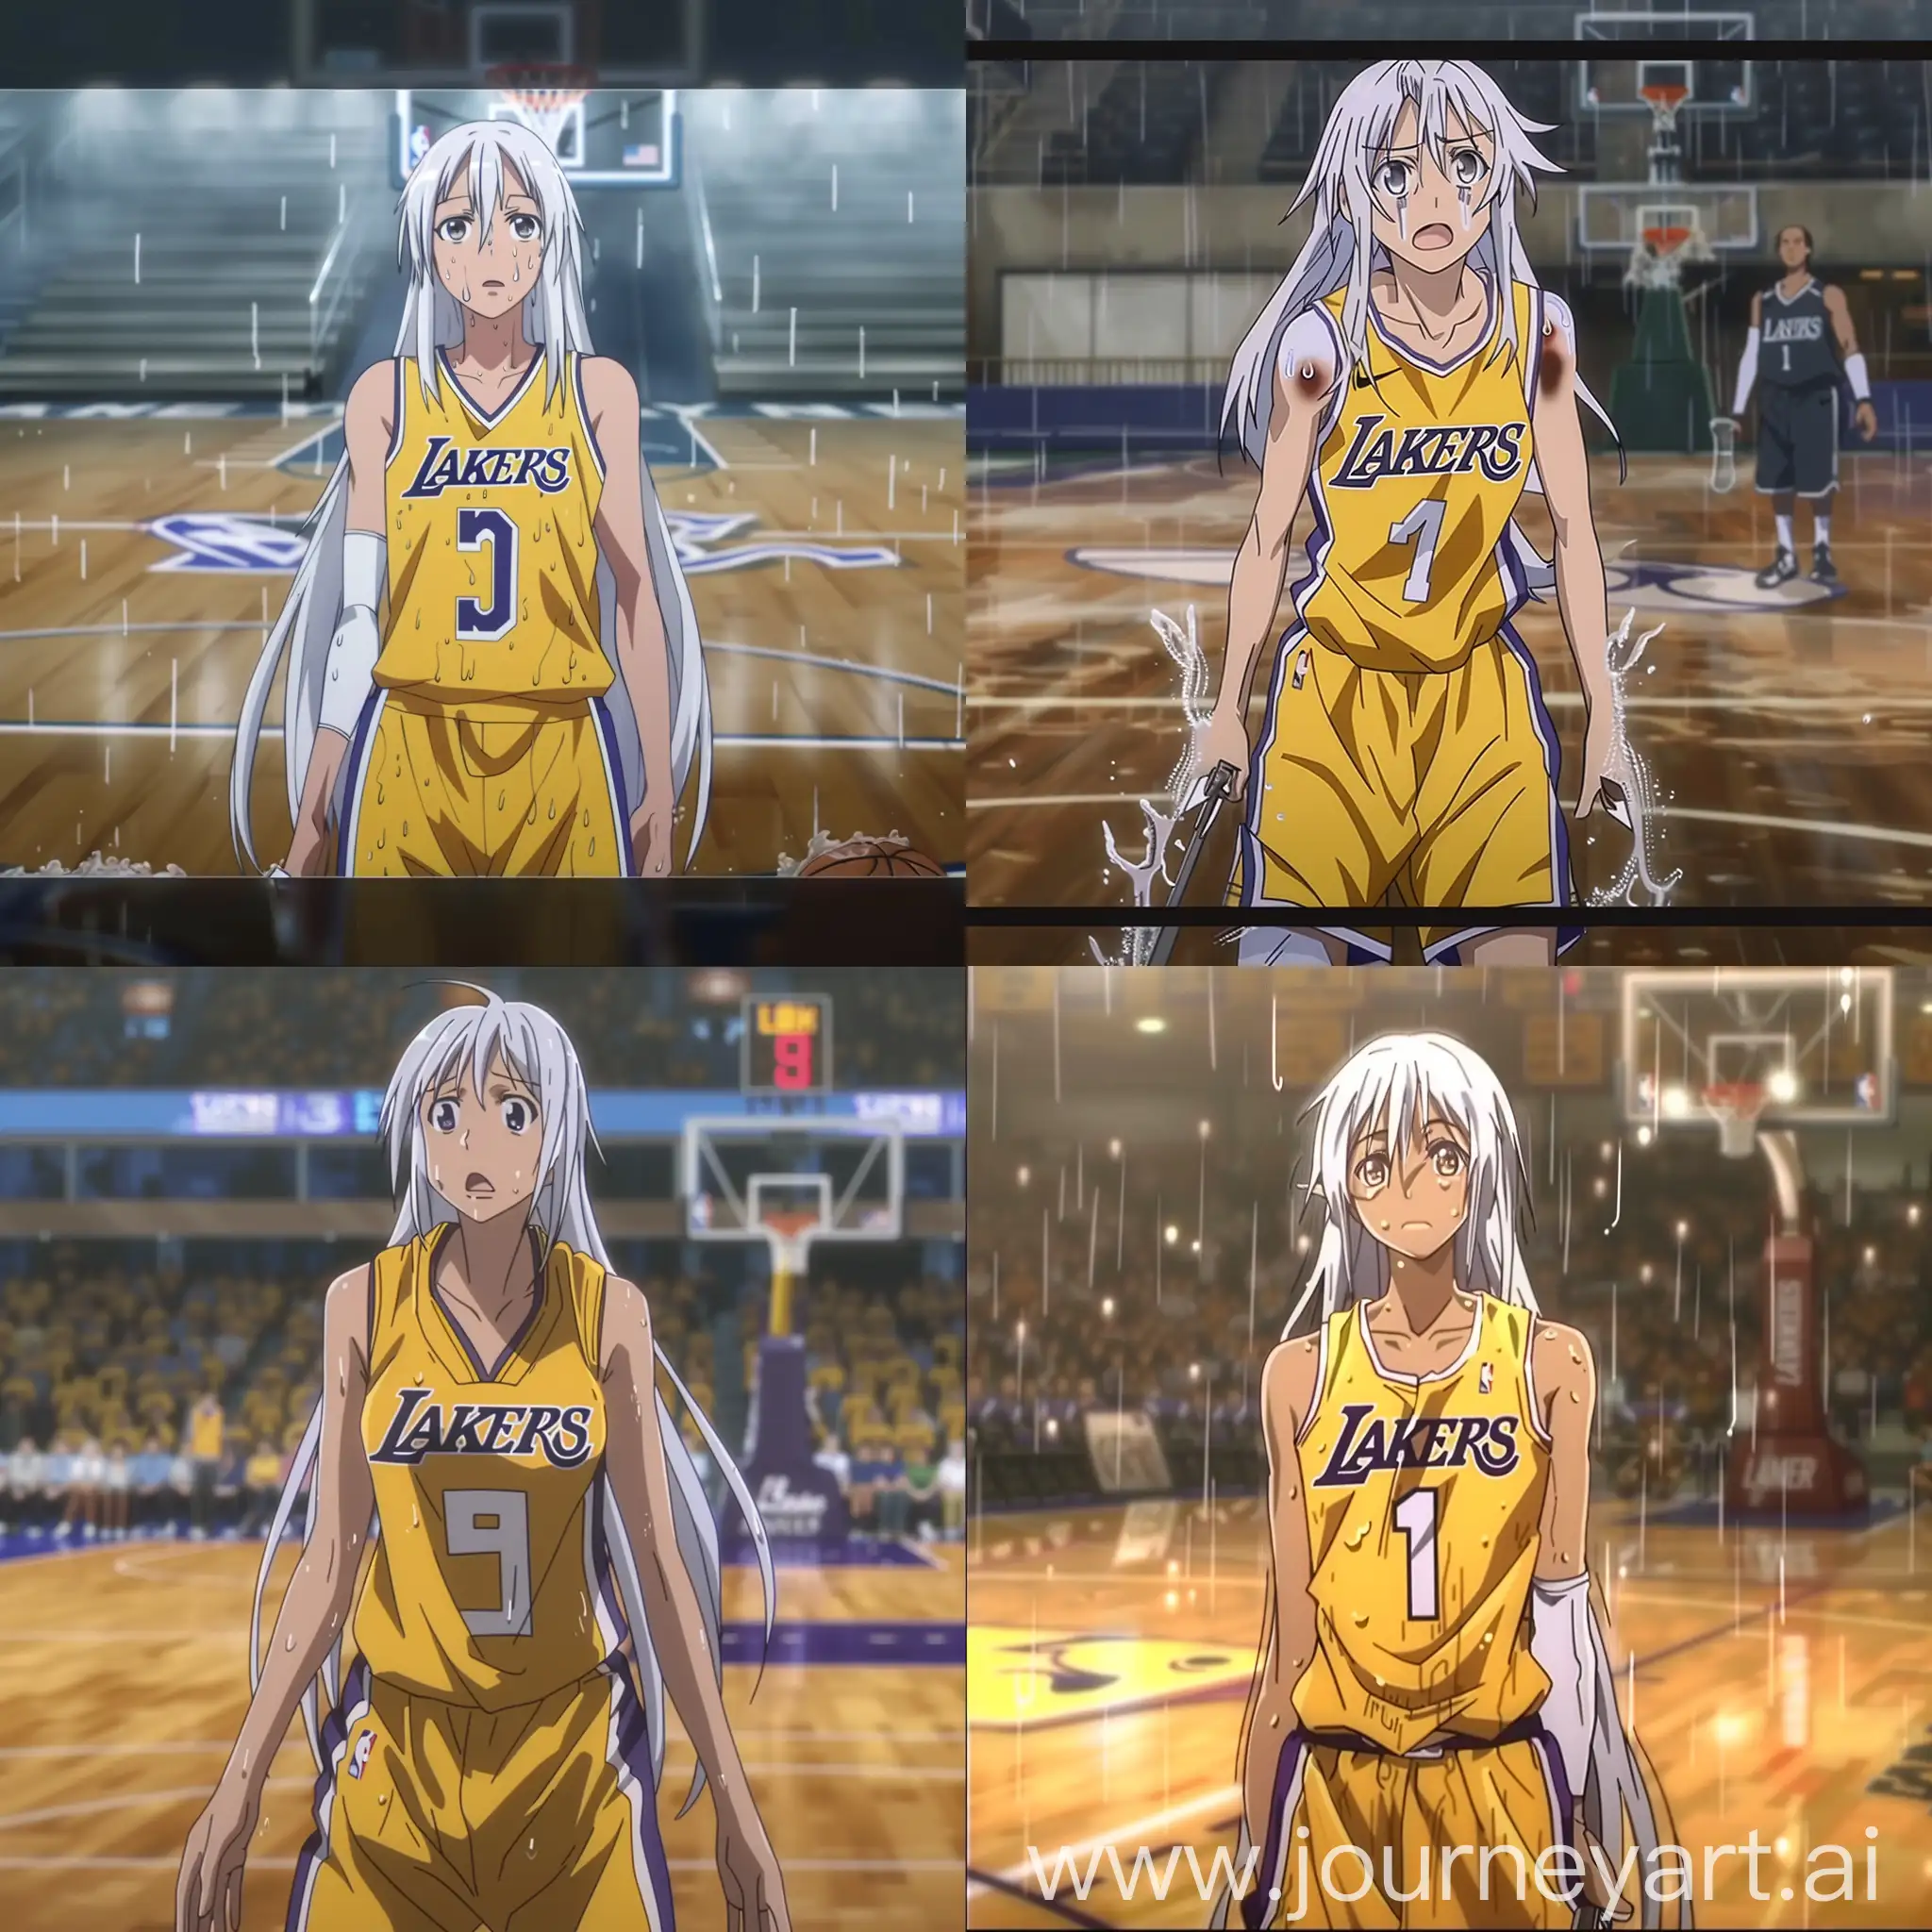 Asuna-Yuuki-in-Lakers-Uniform-on-Basketball-Court